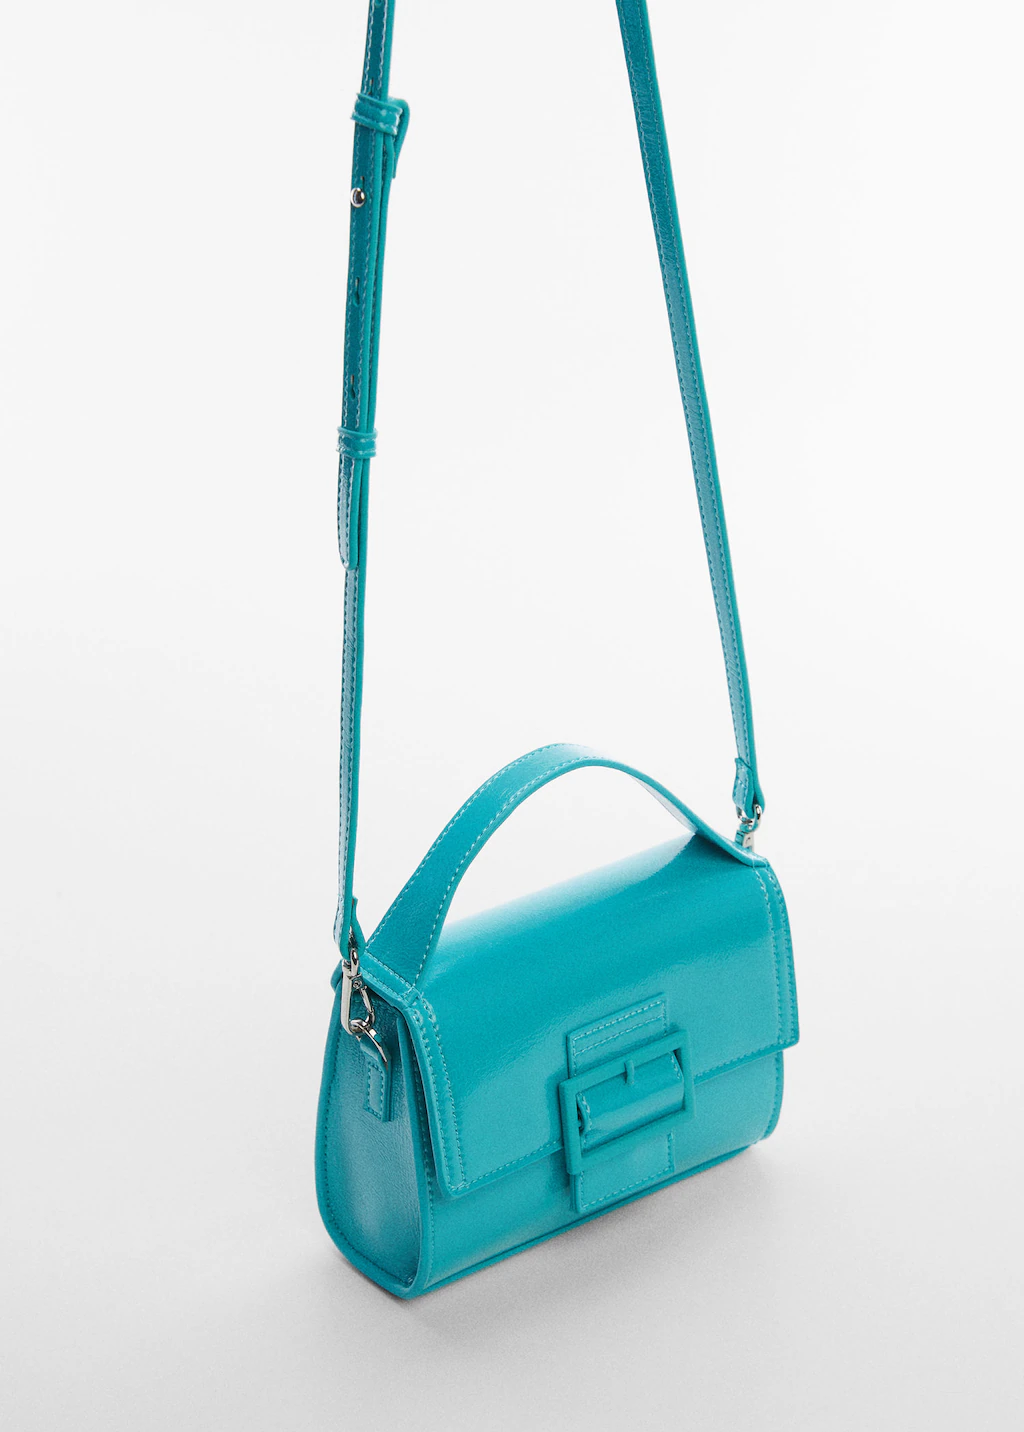 Does this C'est Dior look too big for me as a crossbody? : r/handbags